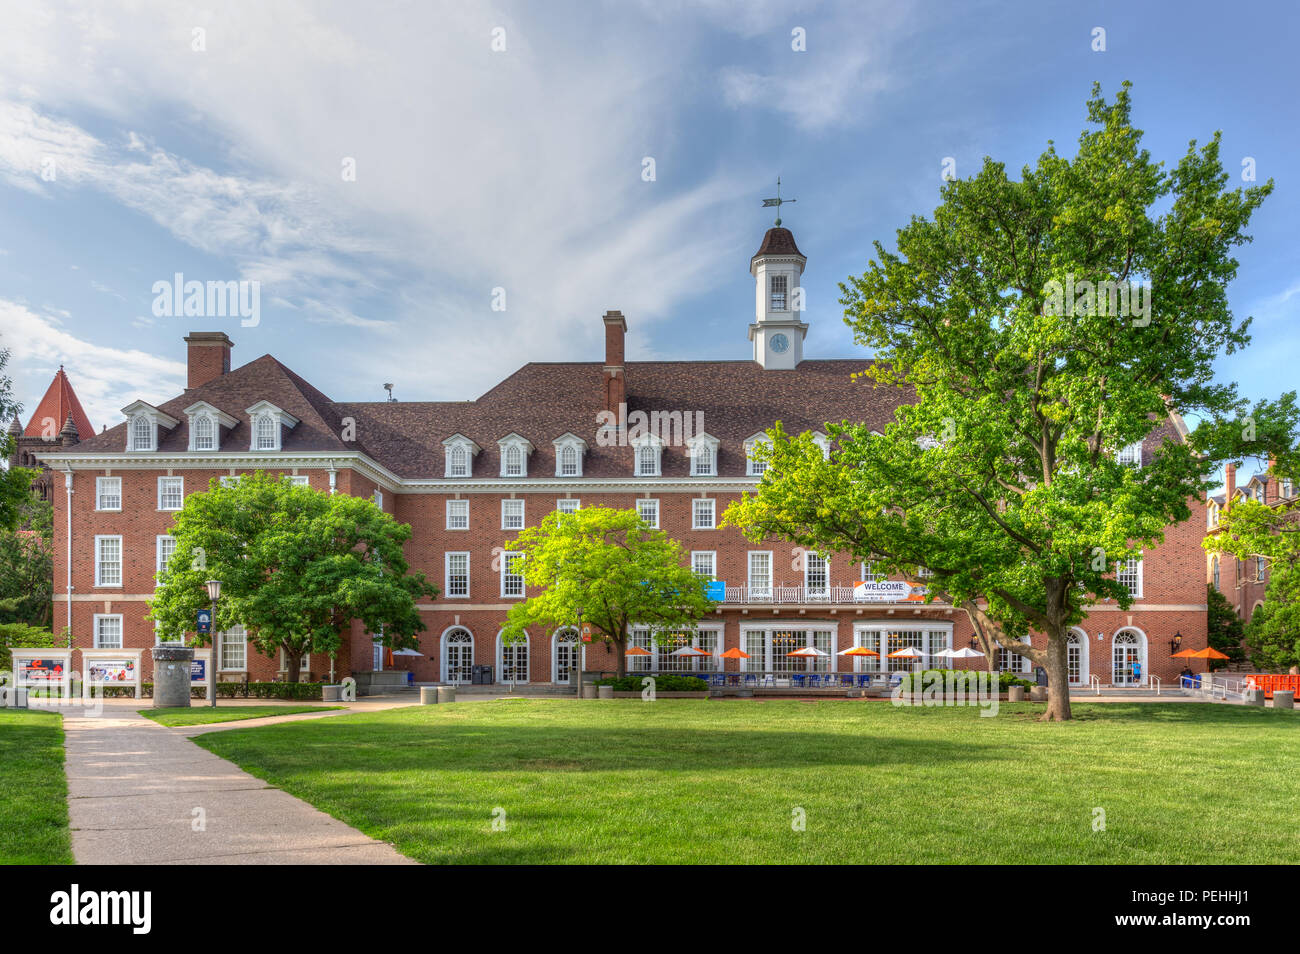 URBANA, IL/USA - JUNE 2, 2018: Davenport Hall on the campus of the University of Illinois at Urbana–Champaign. Stock Photo